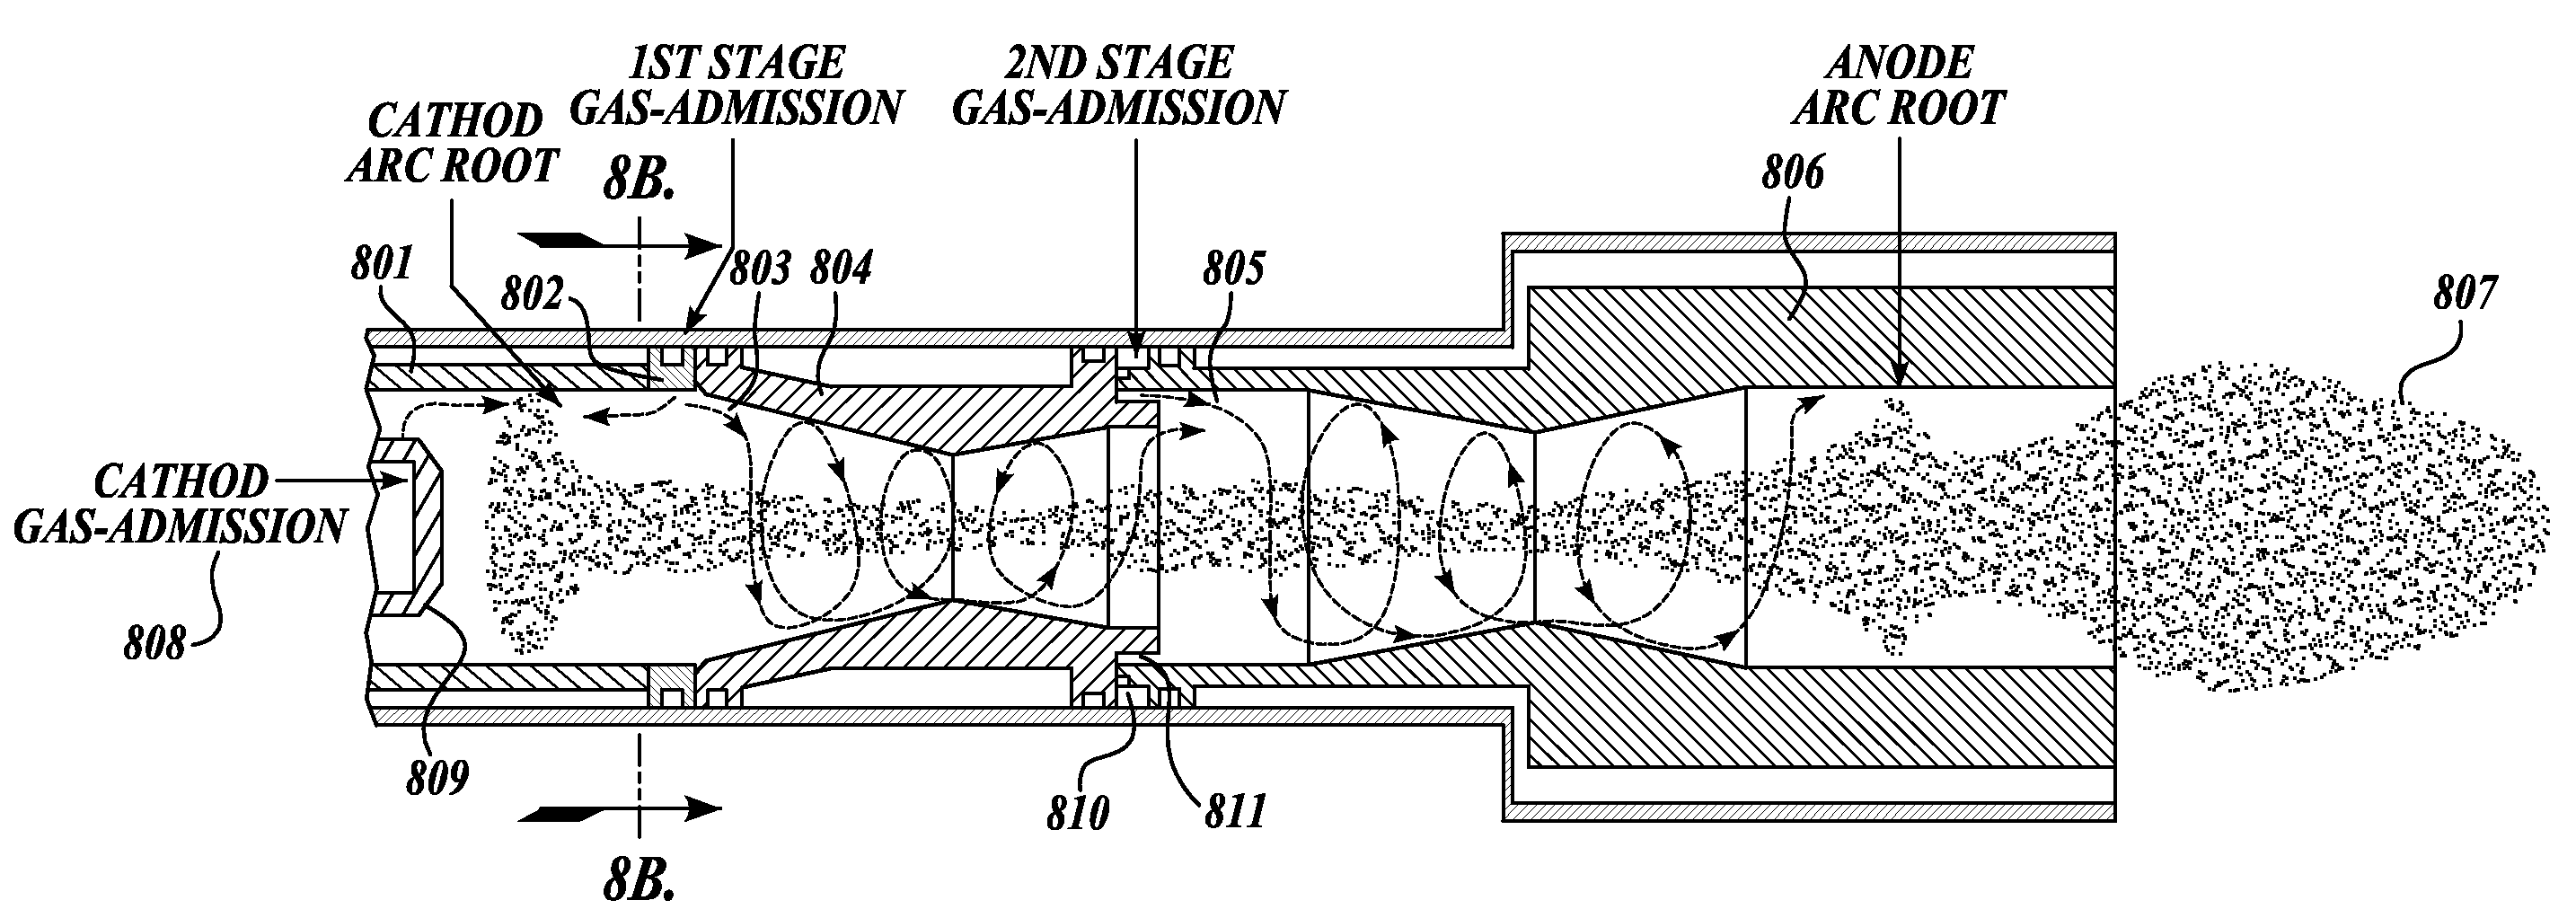 Anode of an arc plasma generator and the arc plasma generator